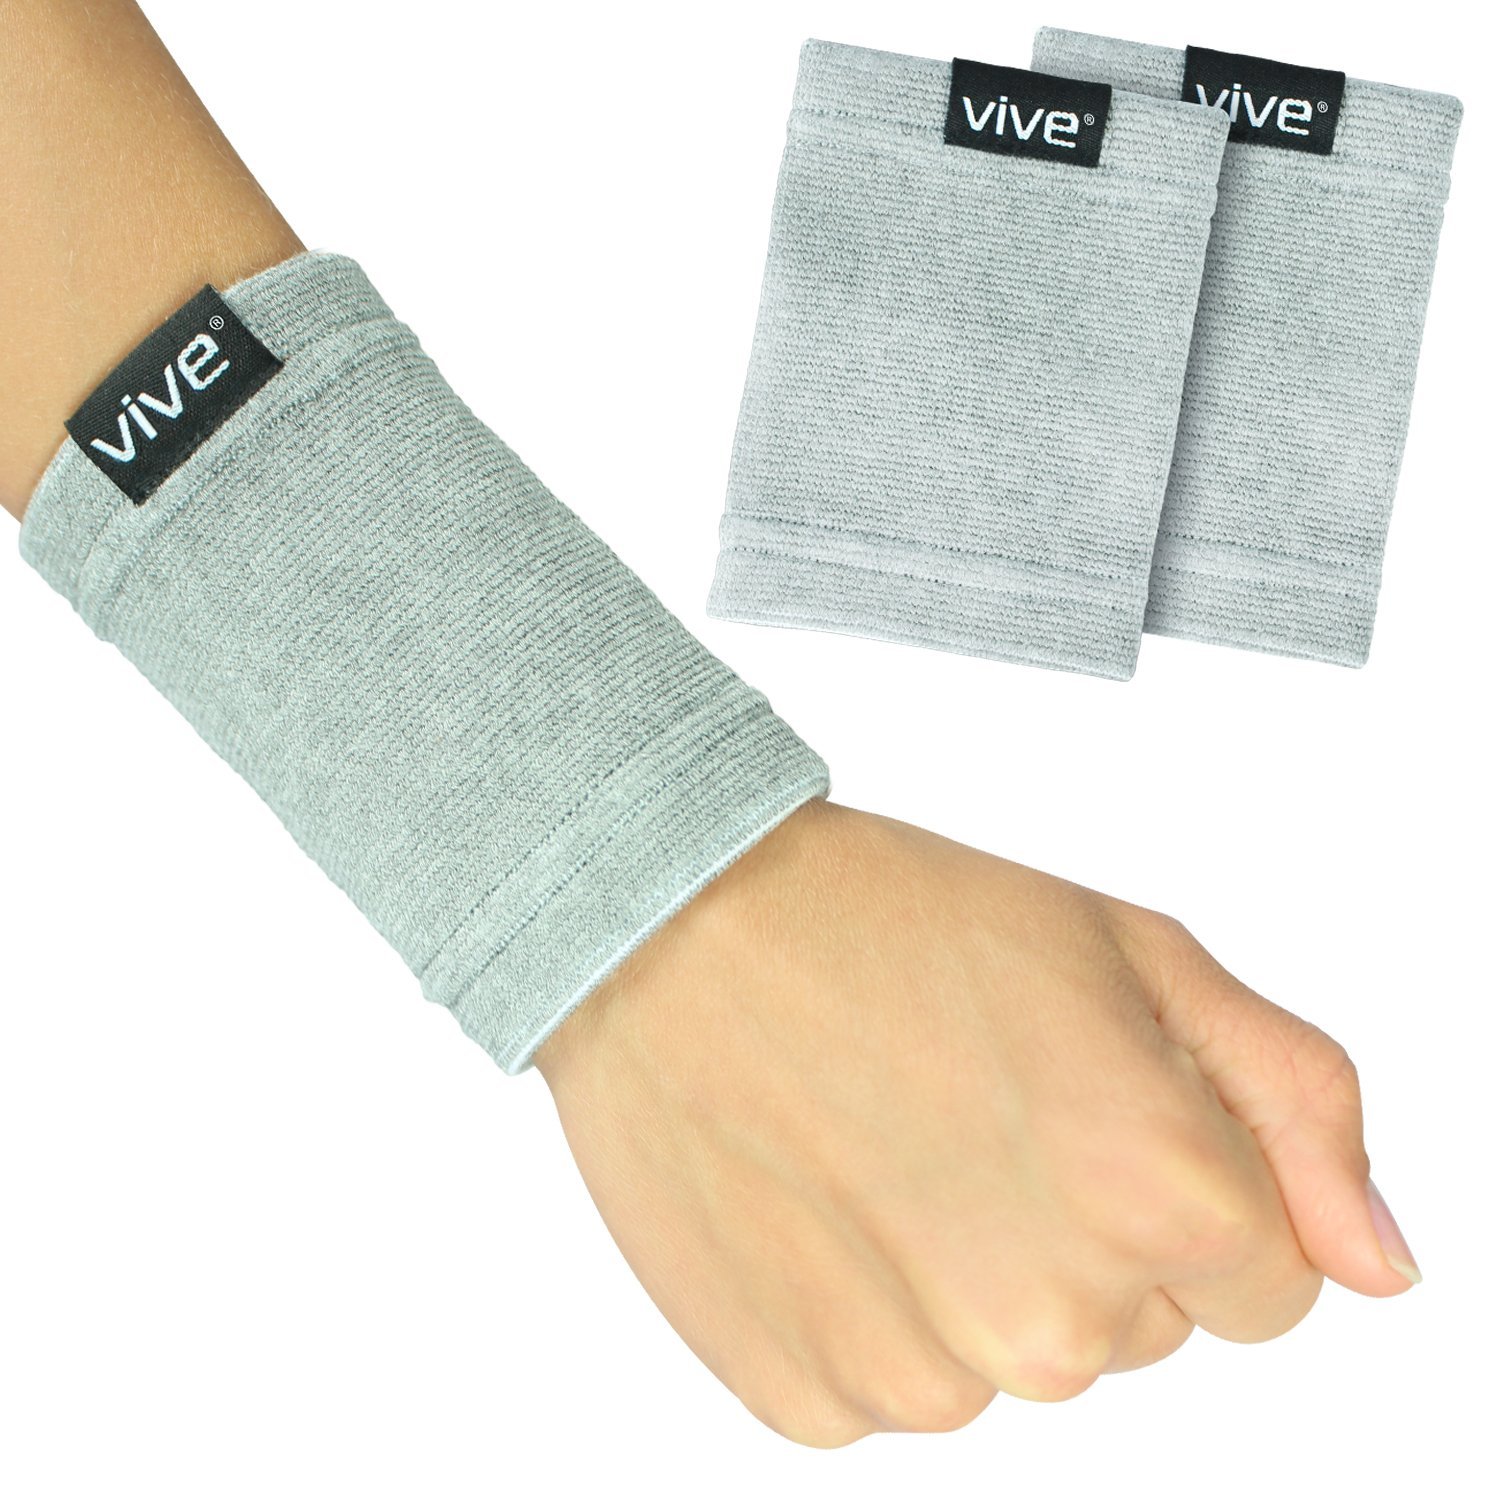 VIVE Wrist Sweatbands Review